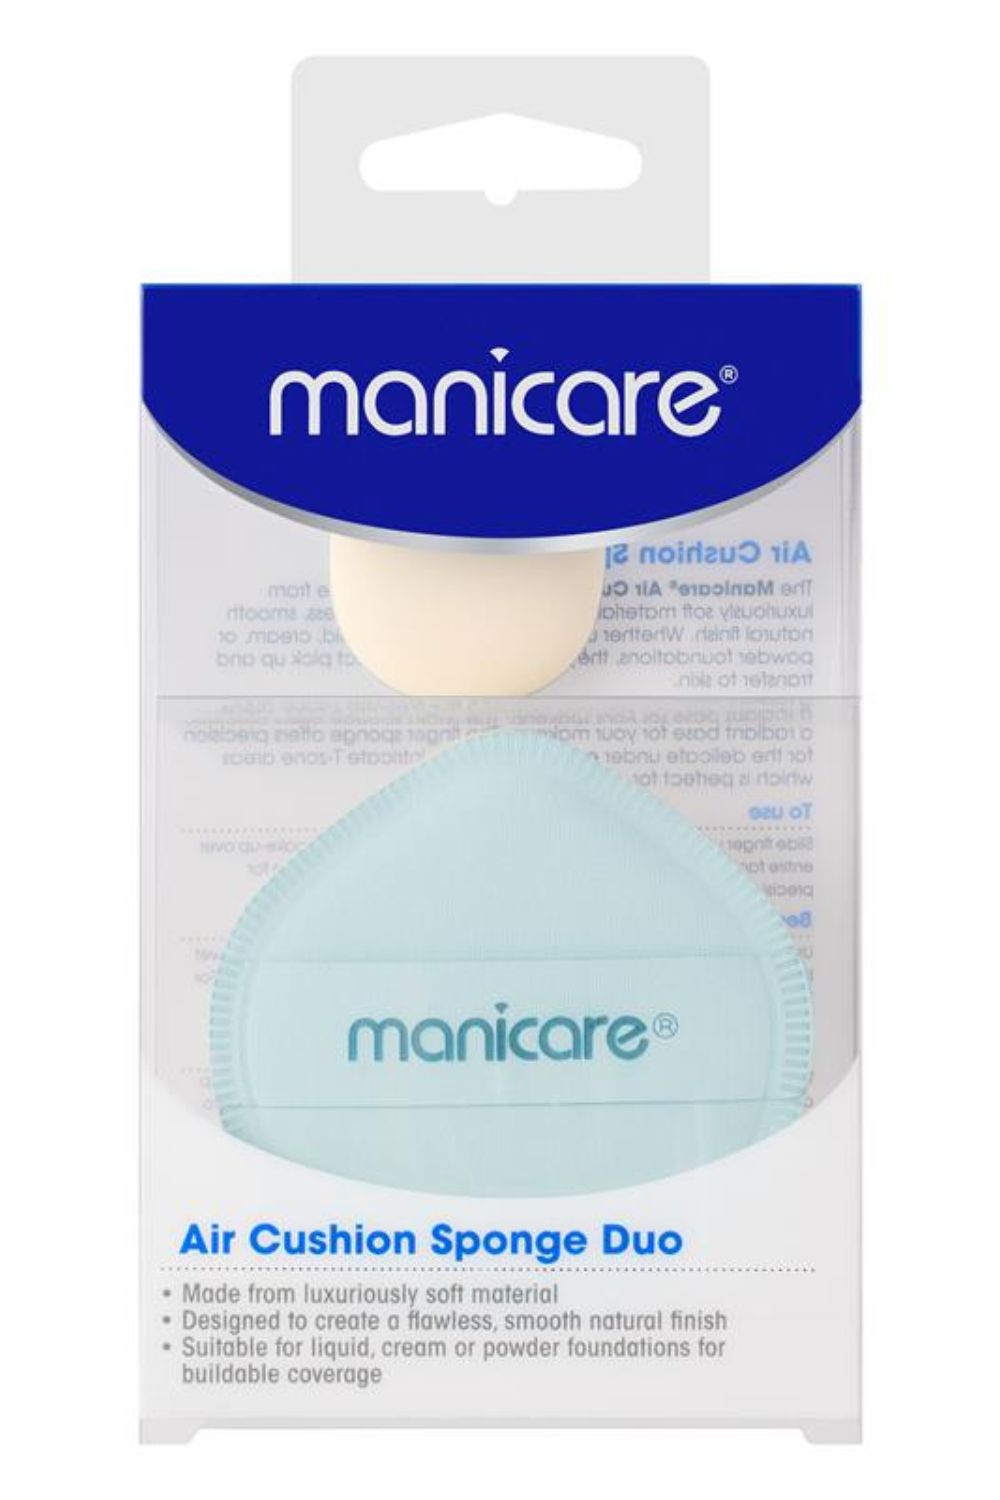 manicare-air-cushion-sponge